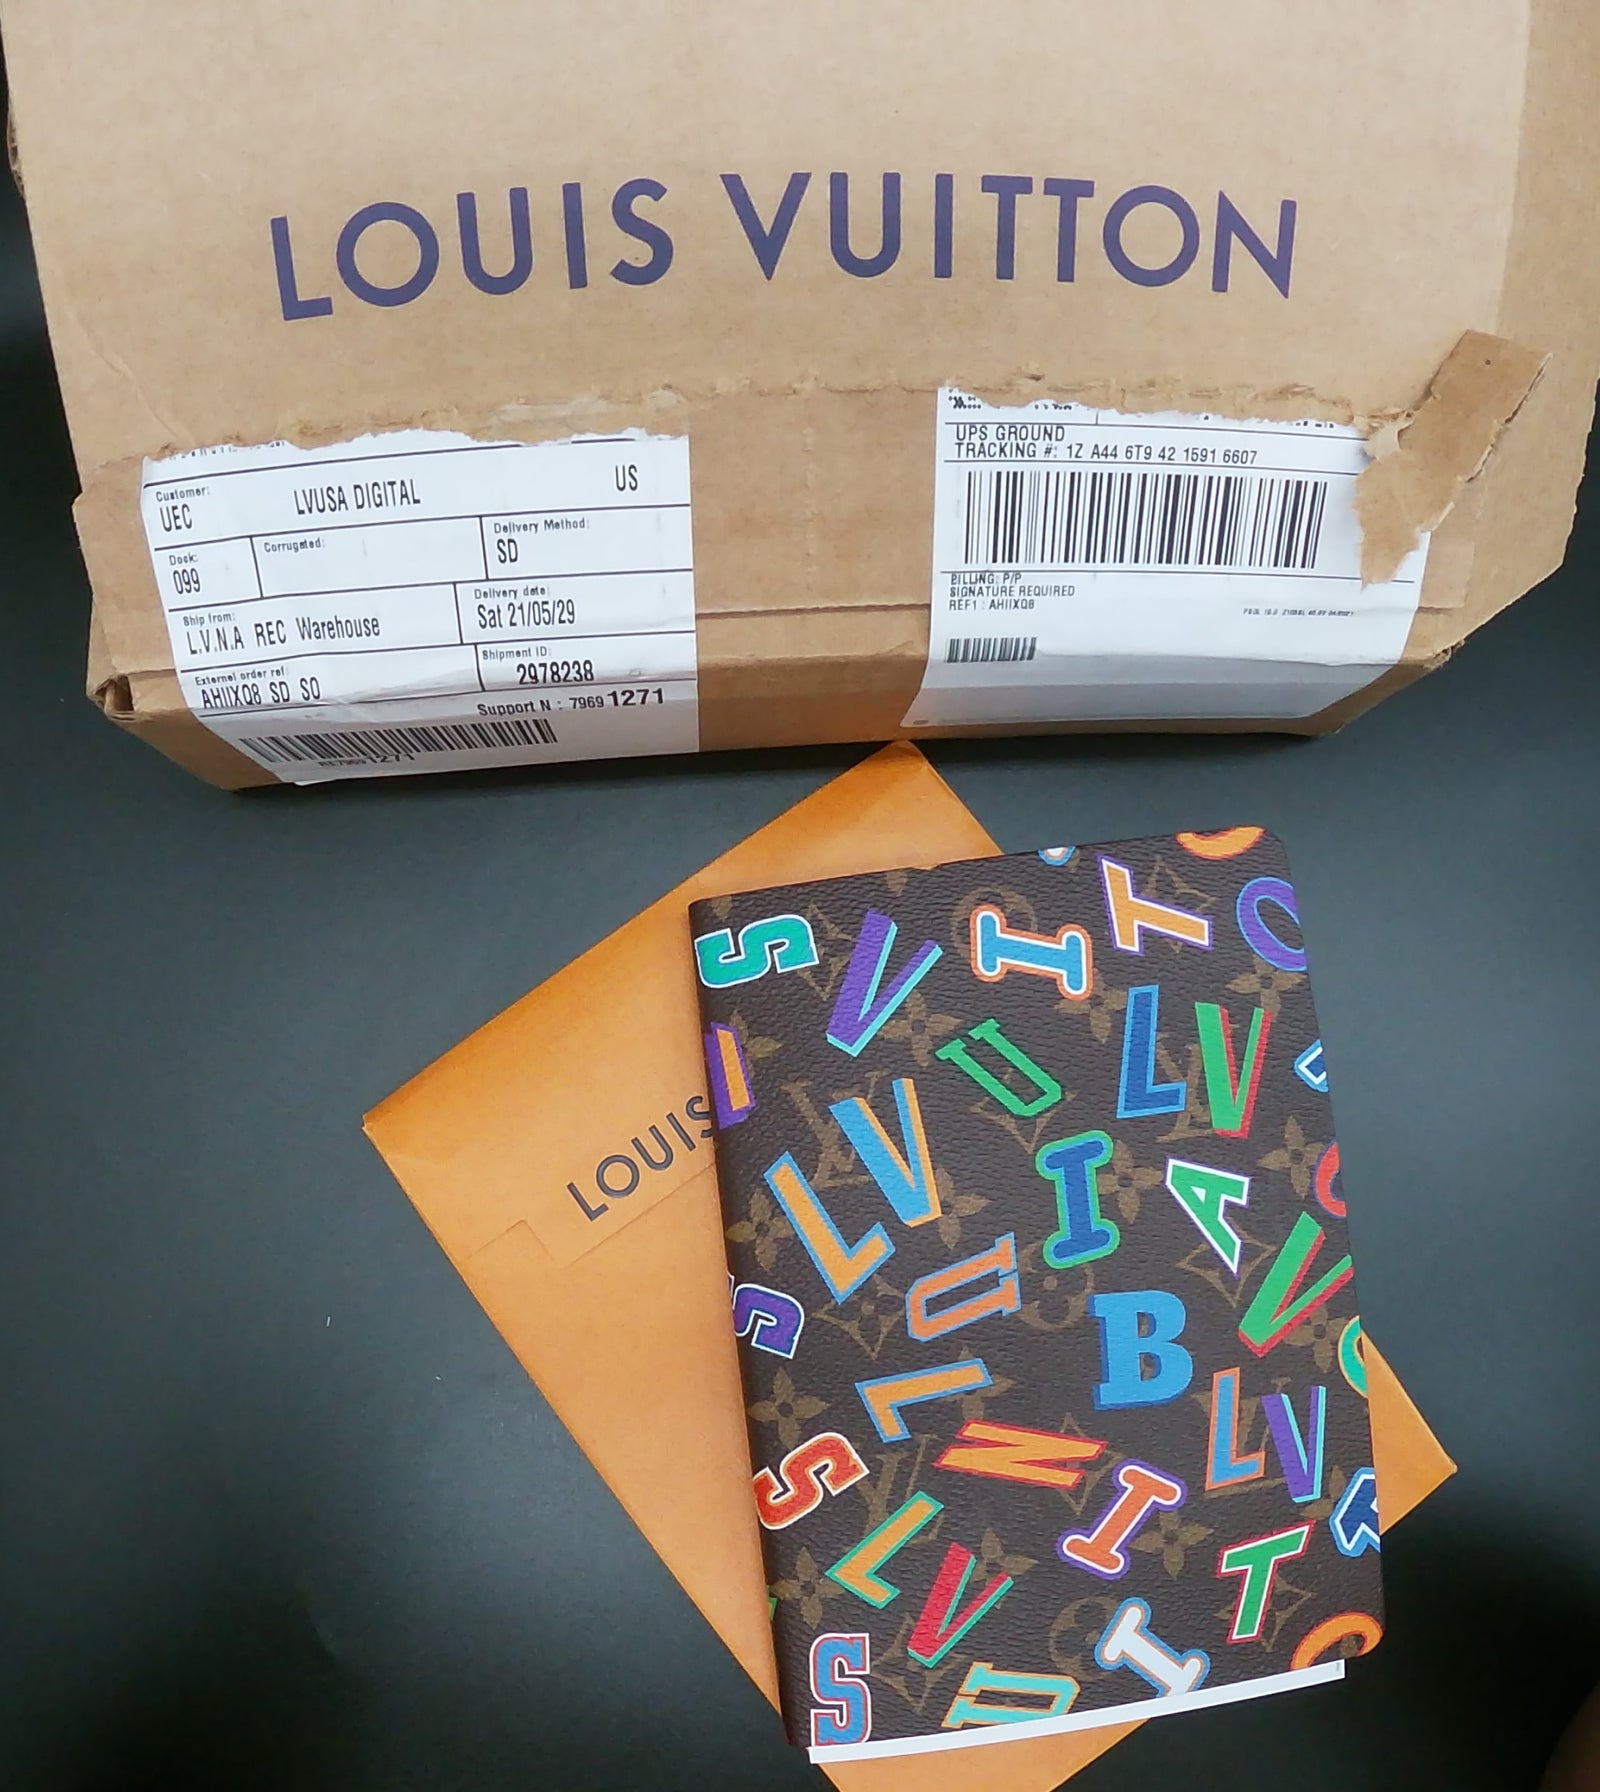 LOUIS VUITTON LOUIS VUITTON Graffiti sneakers shoes flats #5 leather canvas  suede Orange Used 5